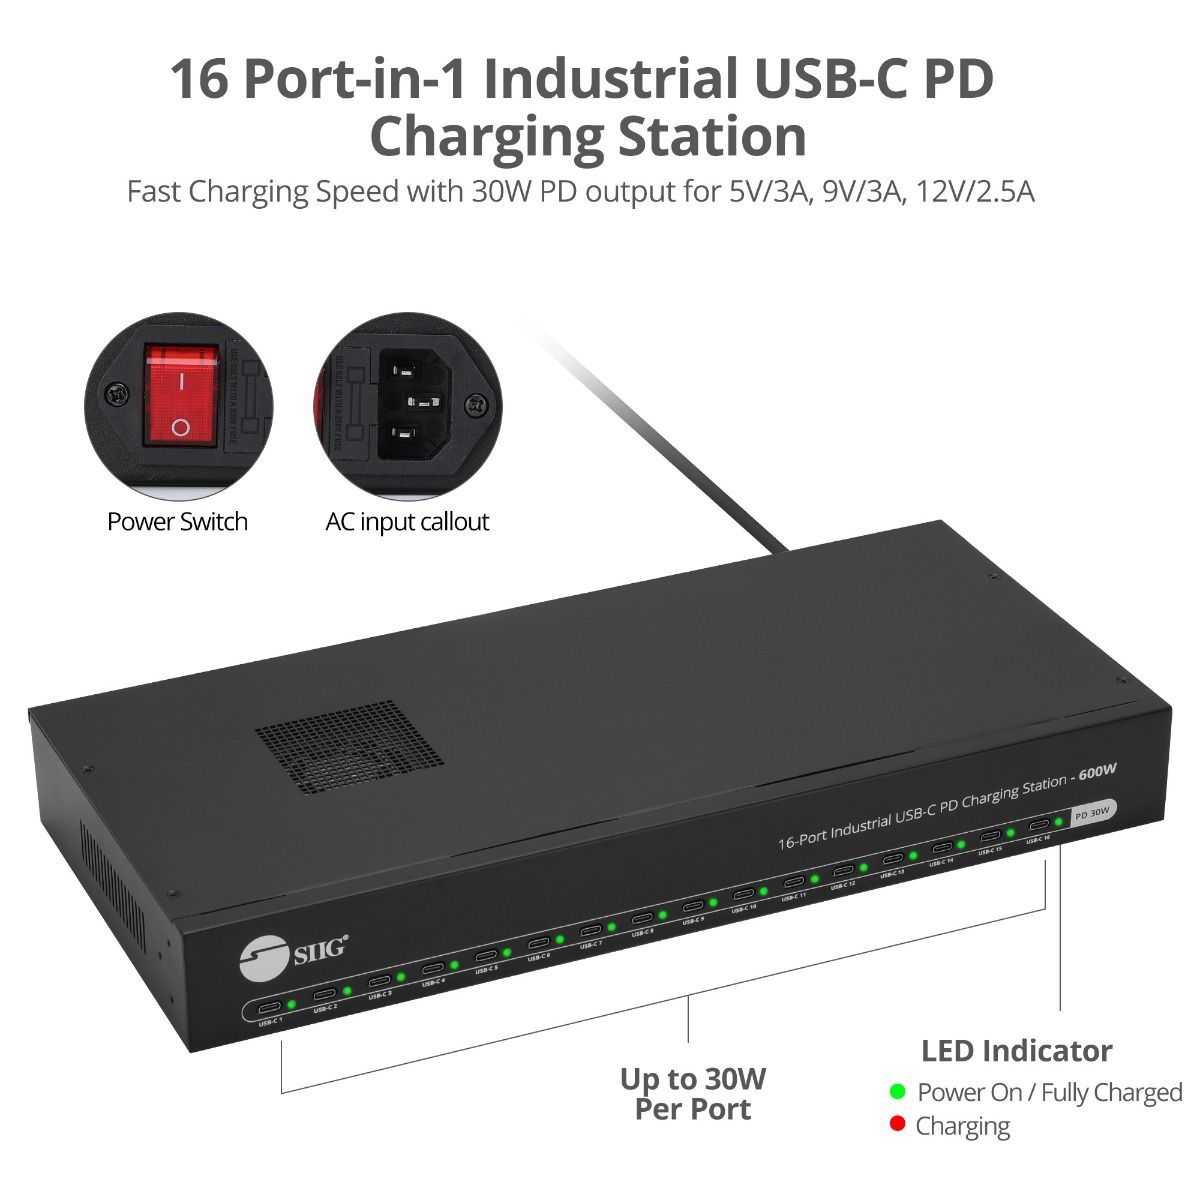 USB-C PD Charging Station